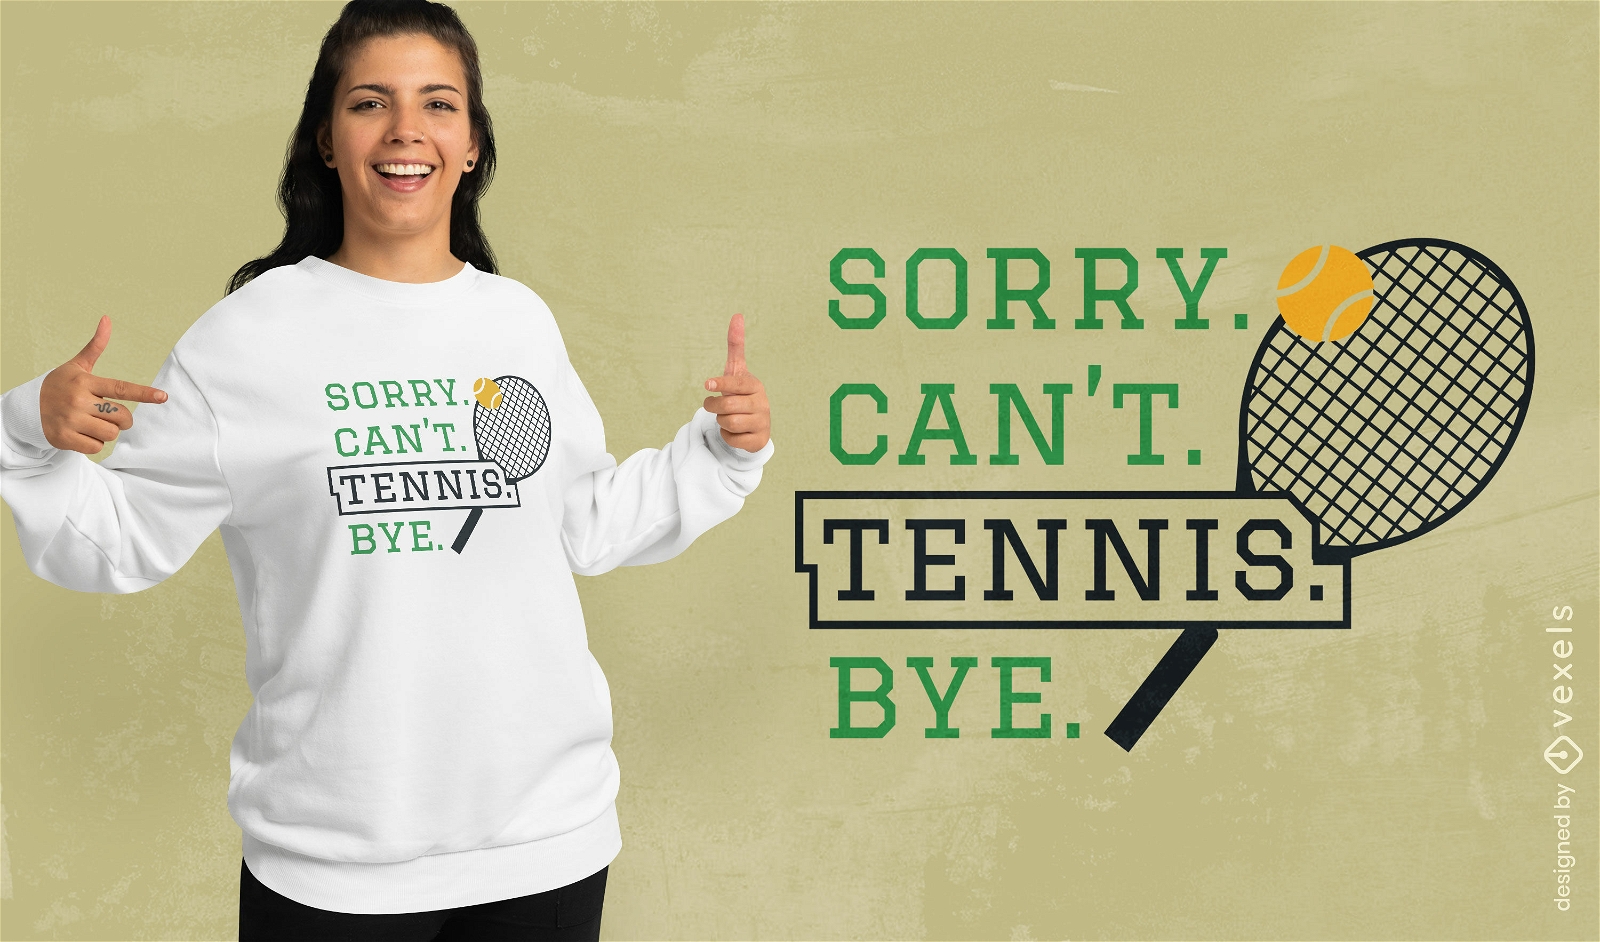 Humorous tennis statement t-shirt design